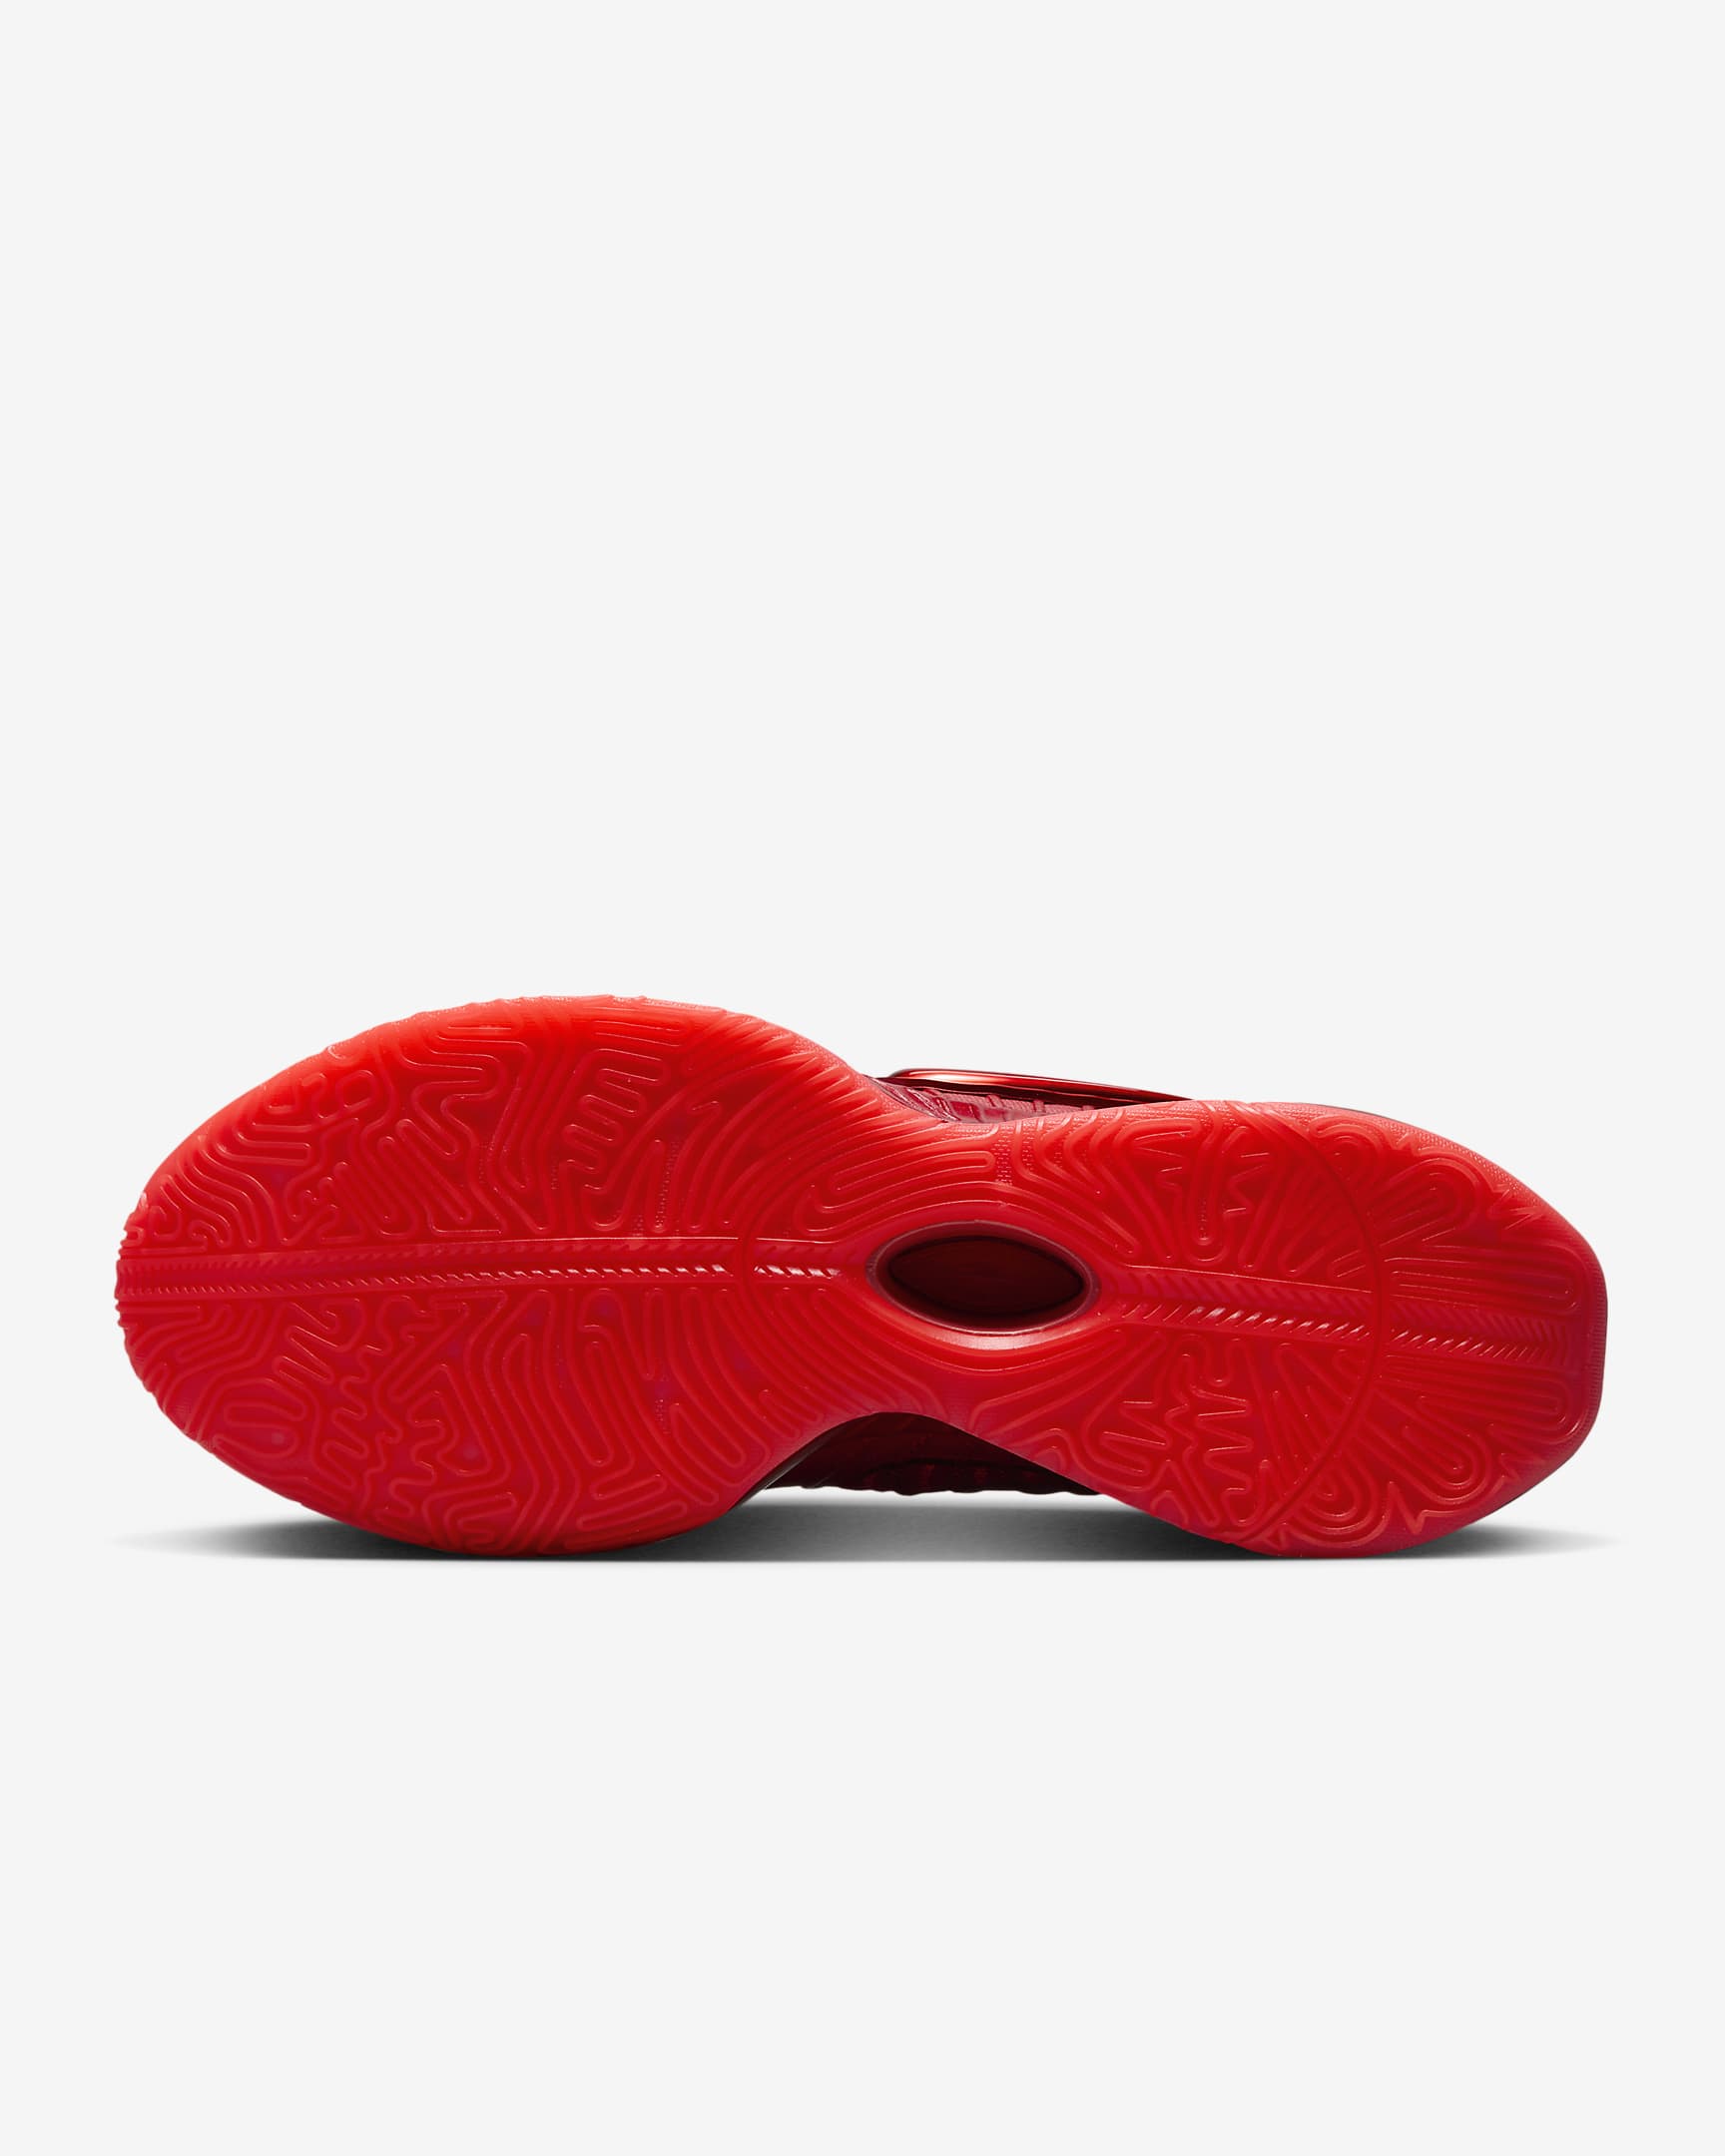 LeBron XXI Basketball Shoes - Bright Crimson/Gym Red